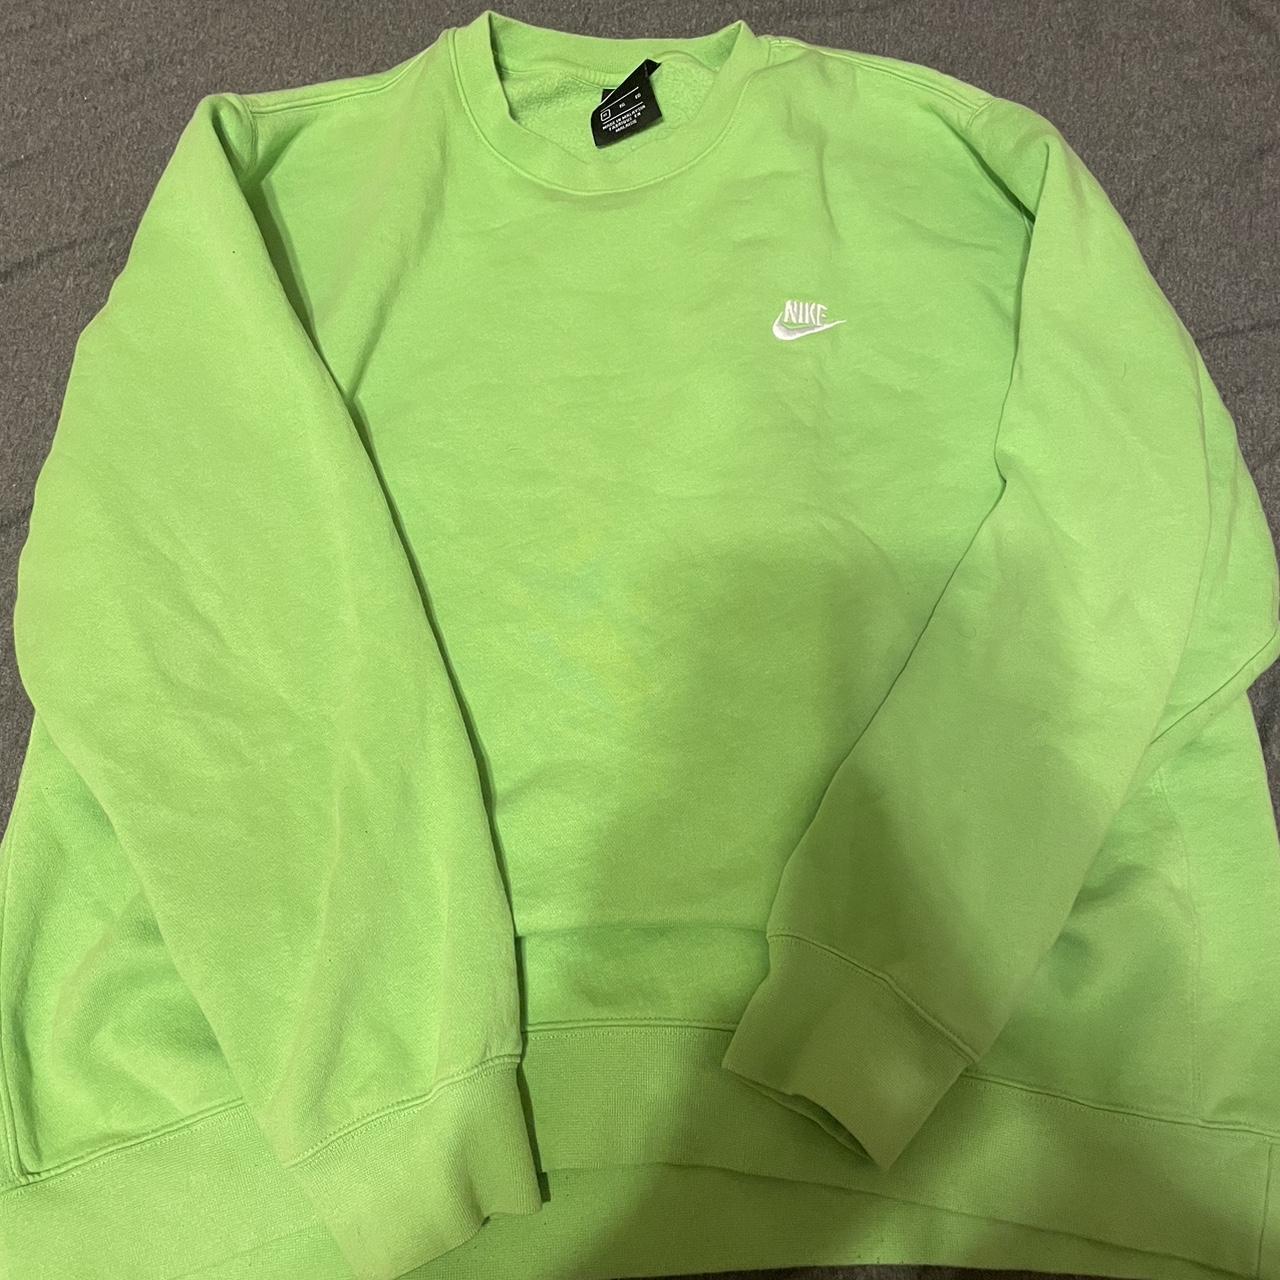 Nike Women's Green and White Sweatshirt | Depop